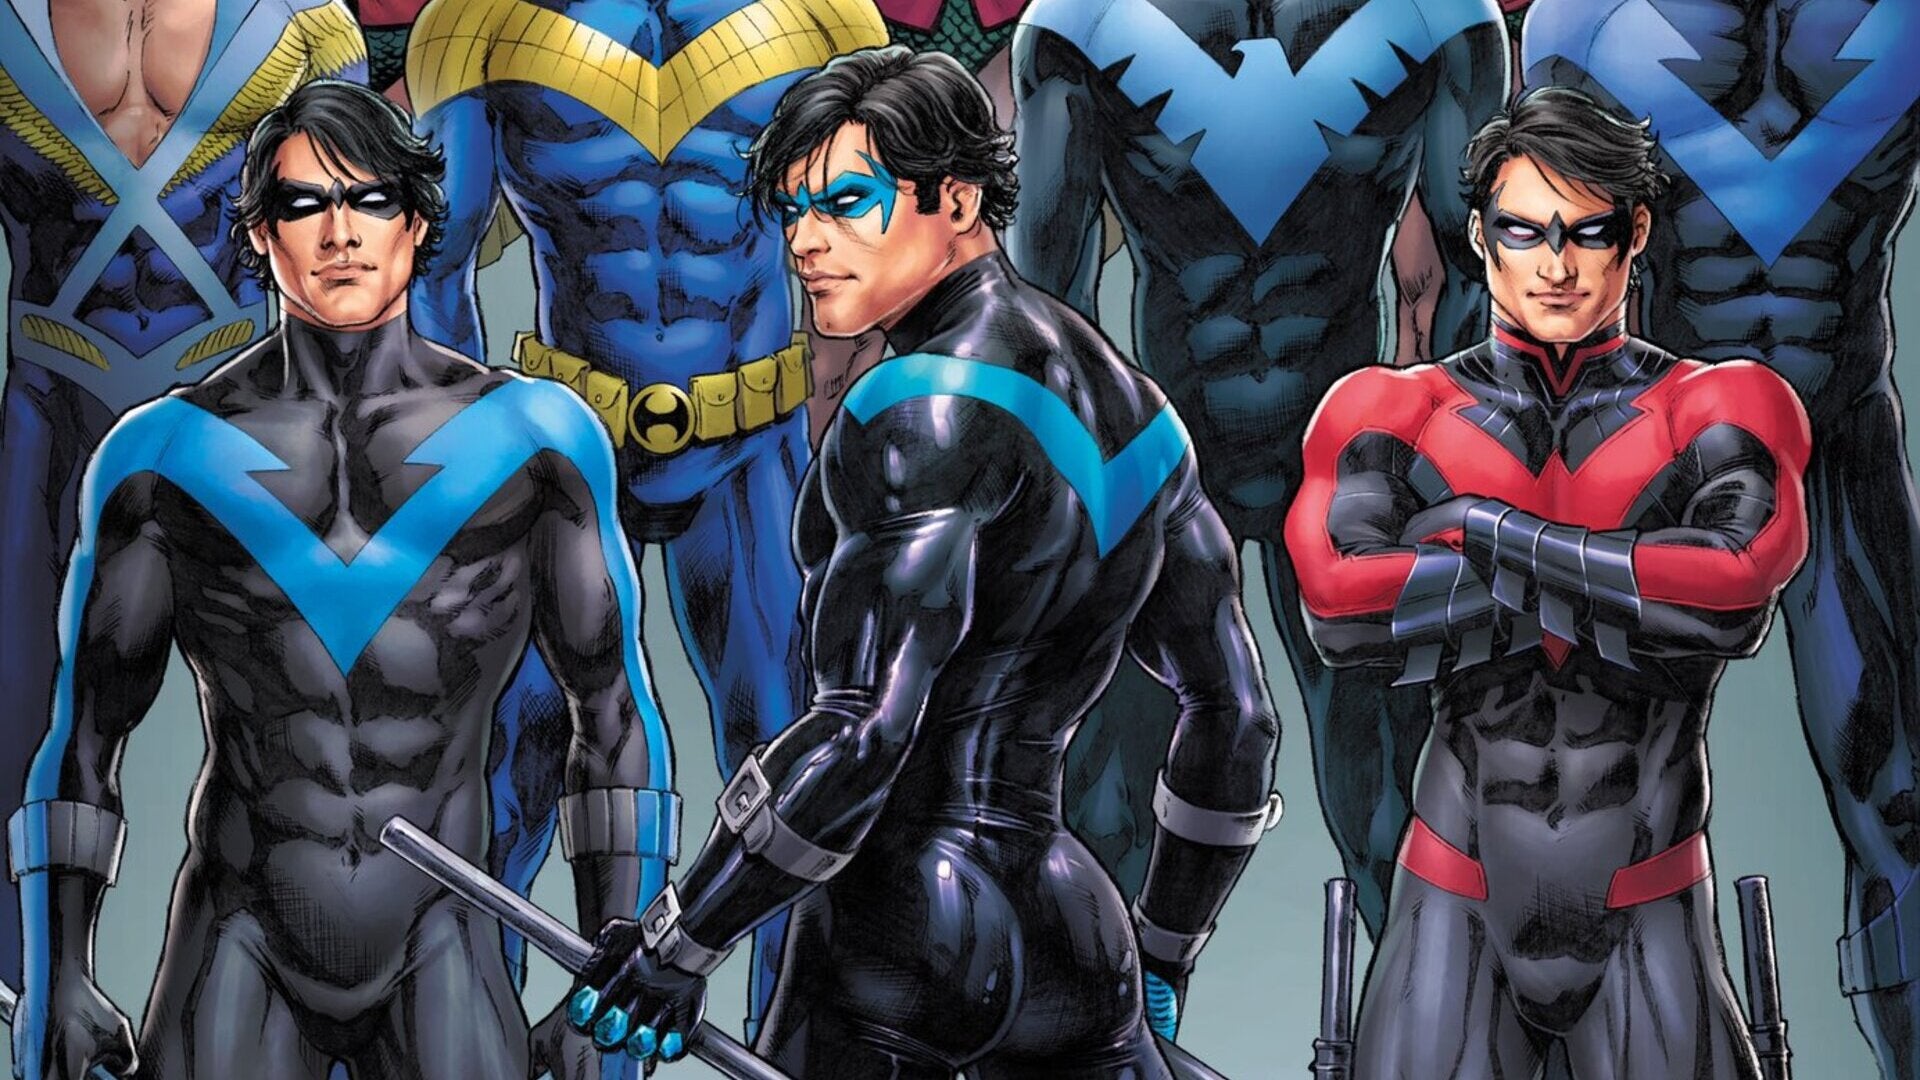 Nightwing's evolution